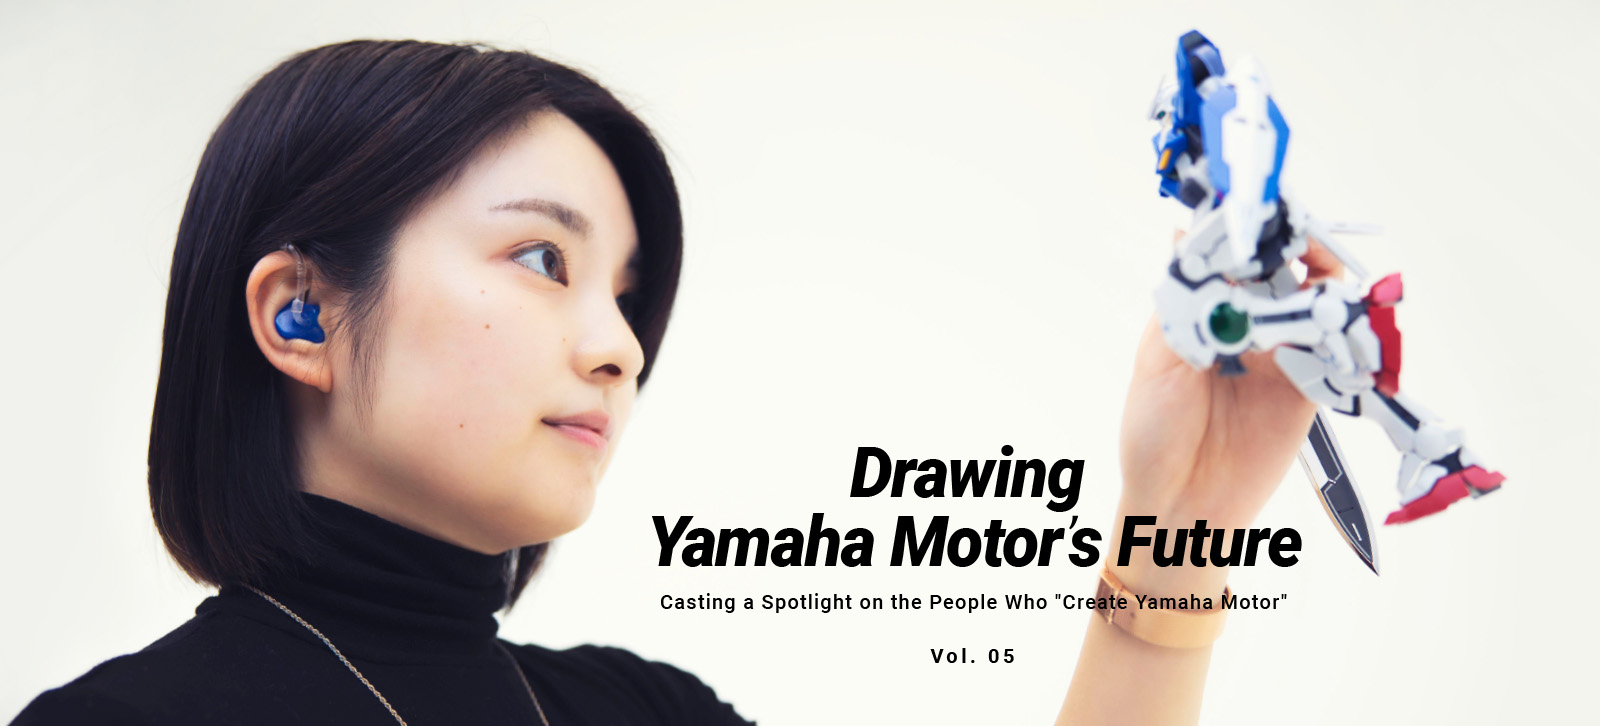 Drawing Yamaha Motor’s Future -Casting a Spotlight on the People Who “Create Yamaha Motor”- Vol. 05